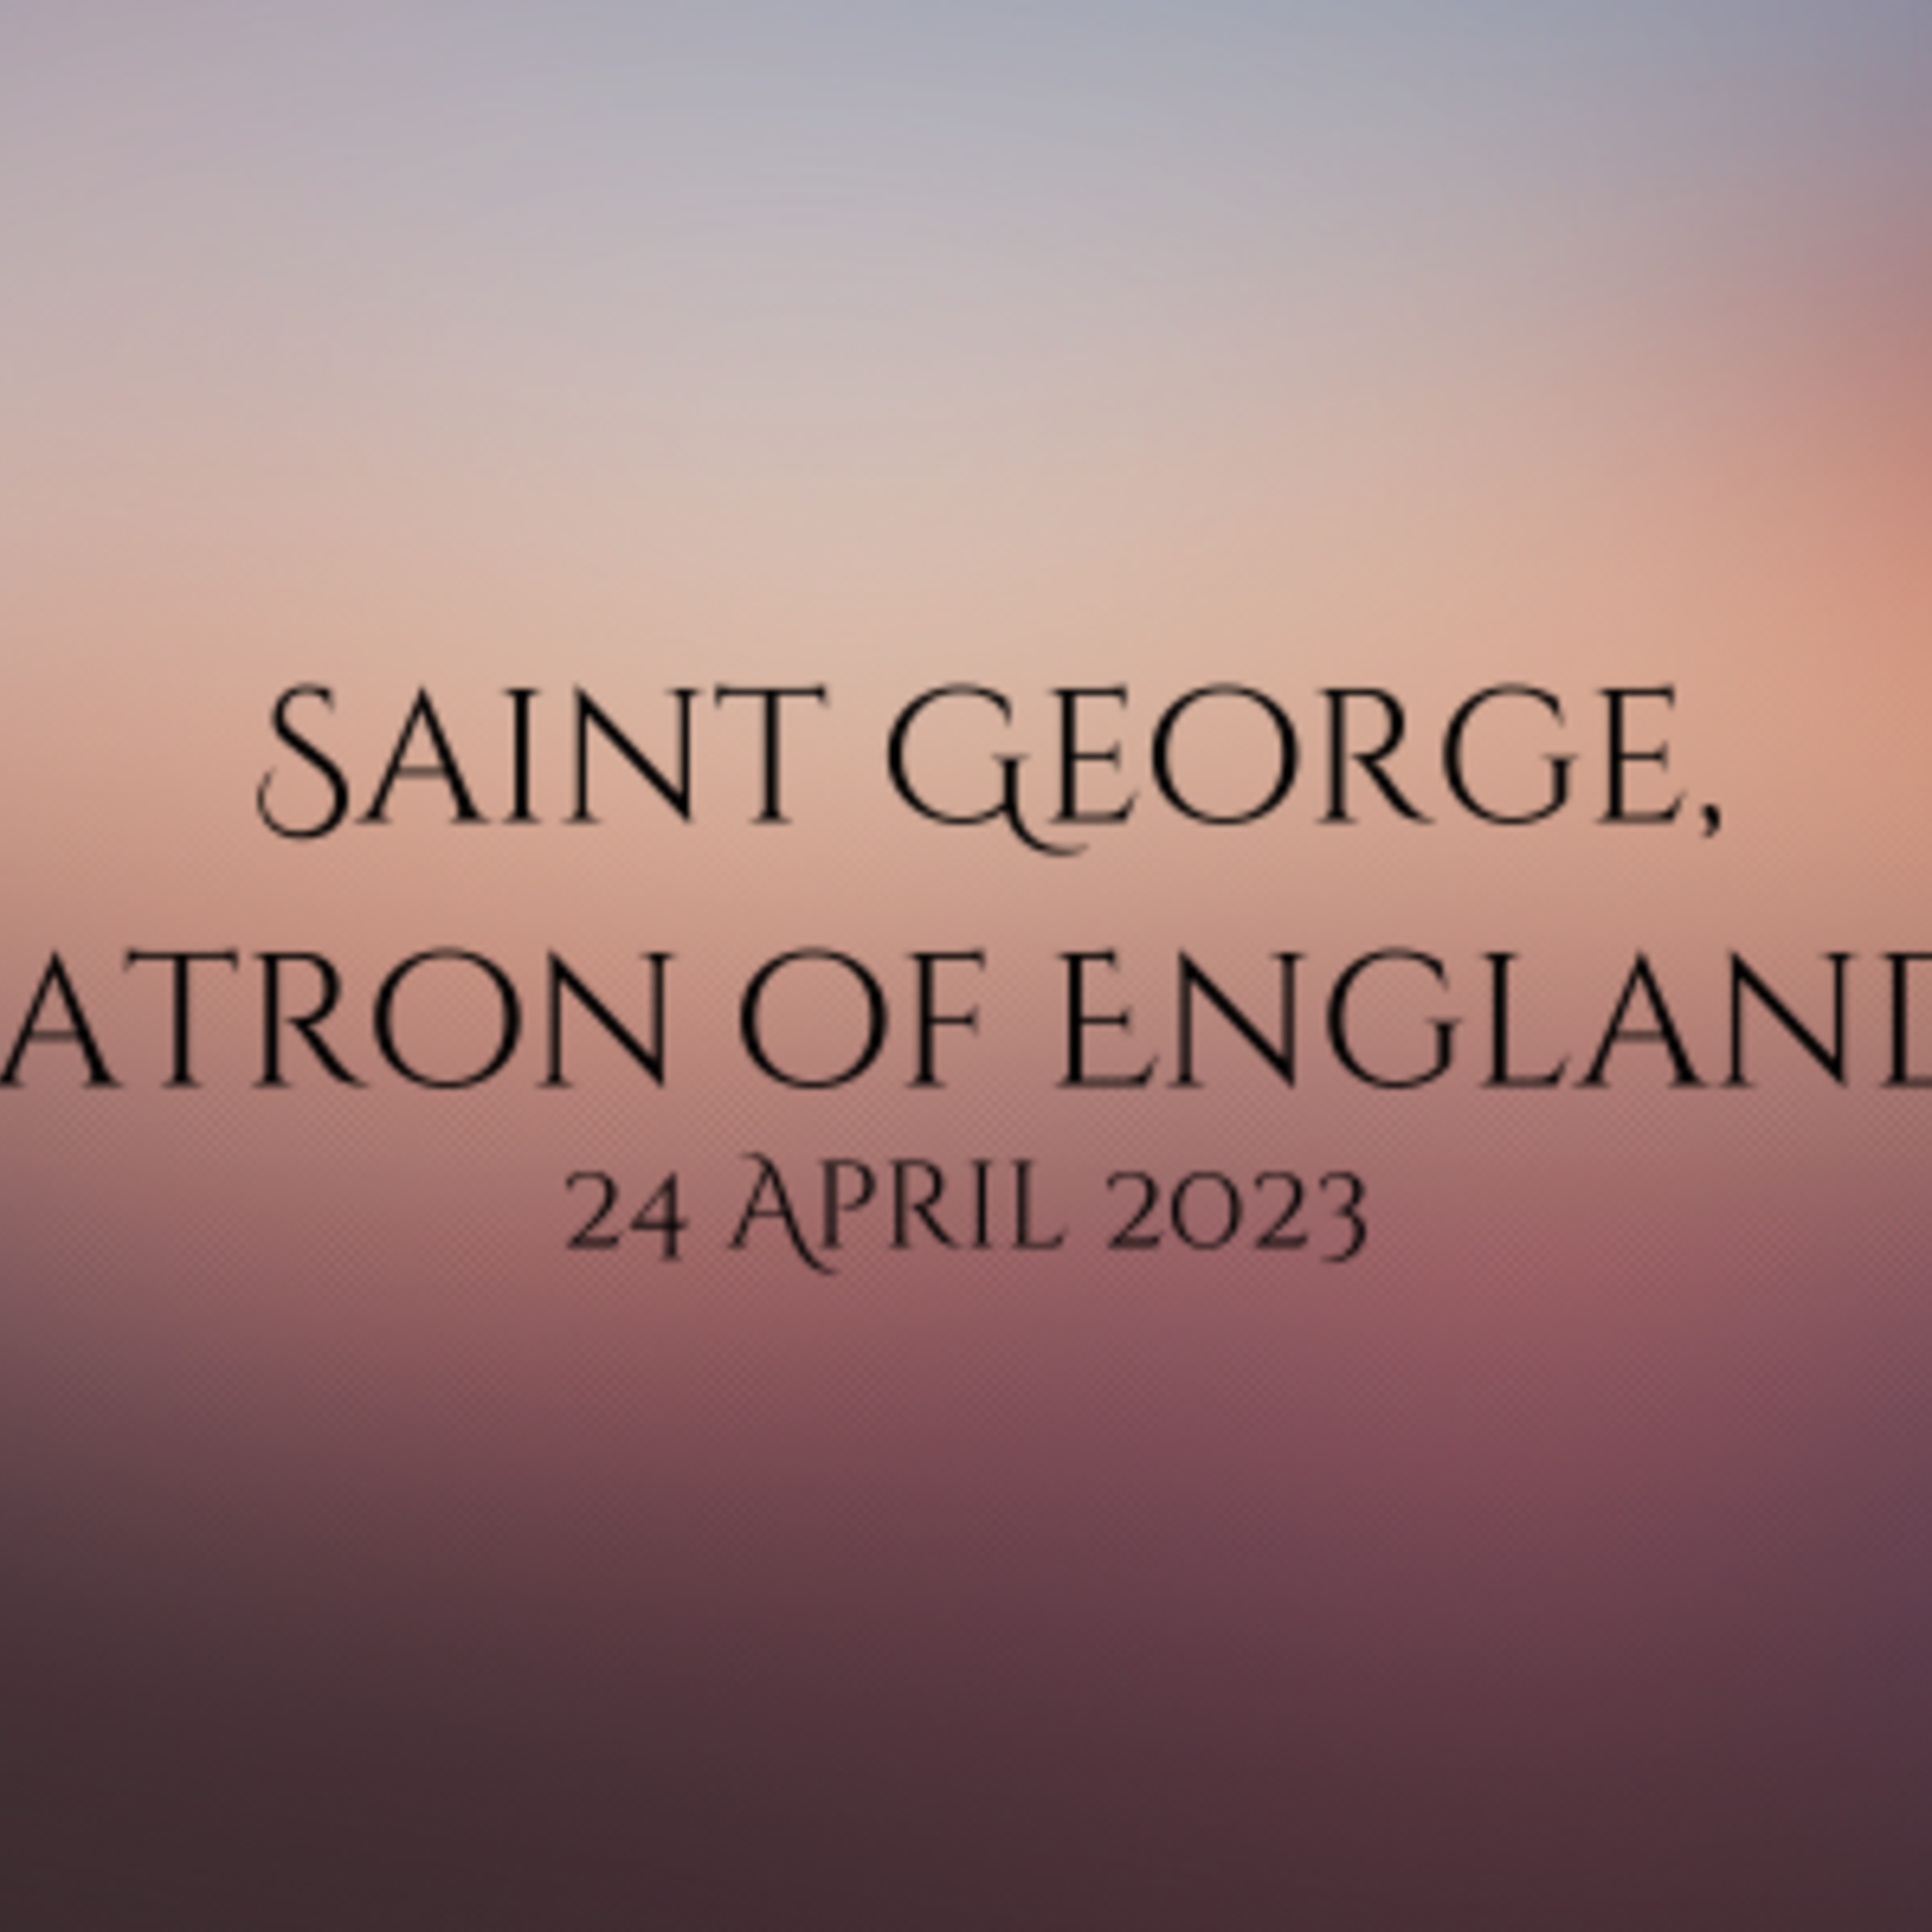 Saint George Patron Of England